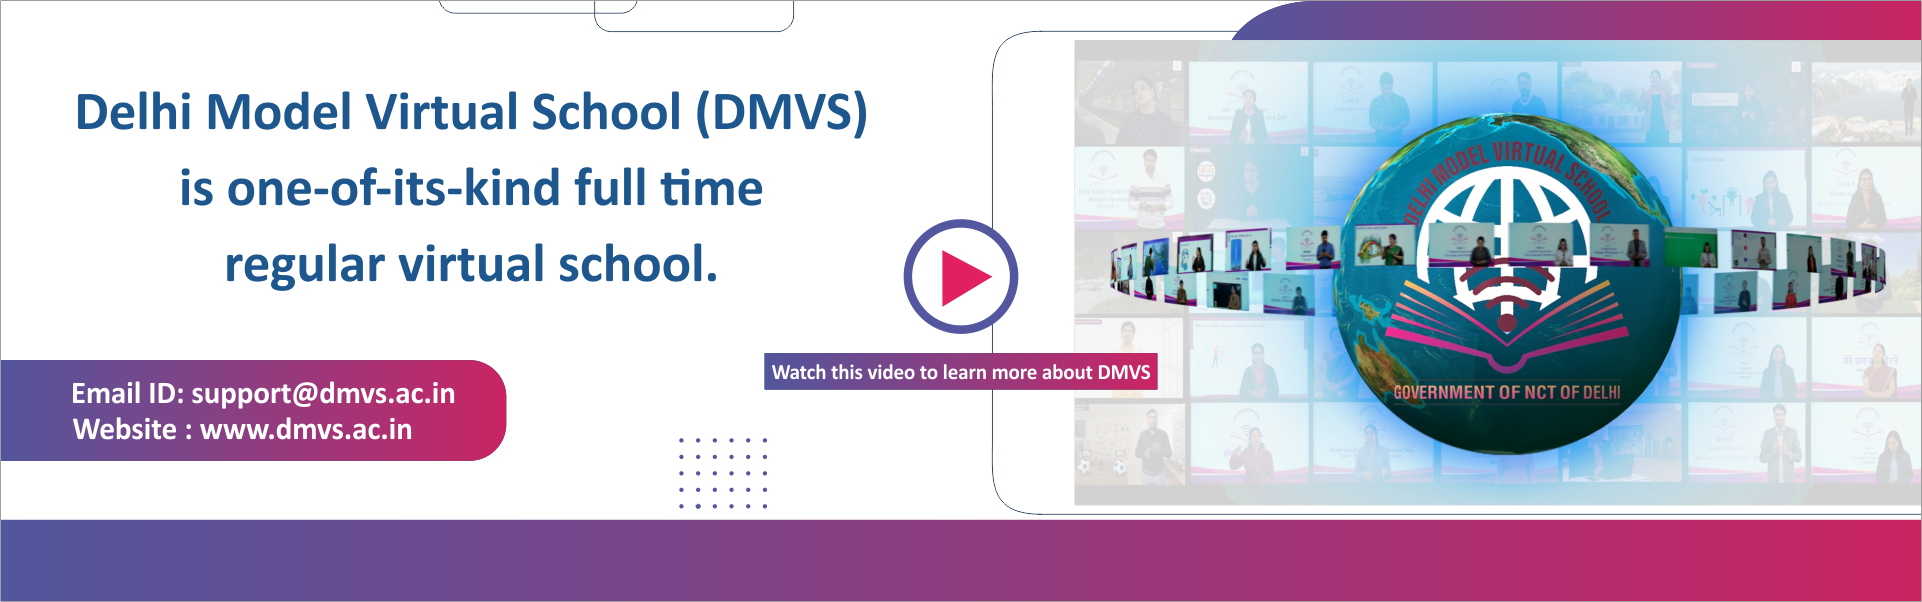 Delhi Model Virtual School (DMVS) - Anywhere Living Anytime Learning Anytime Testing